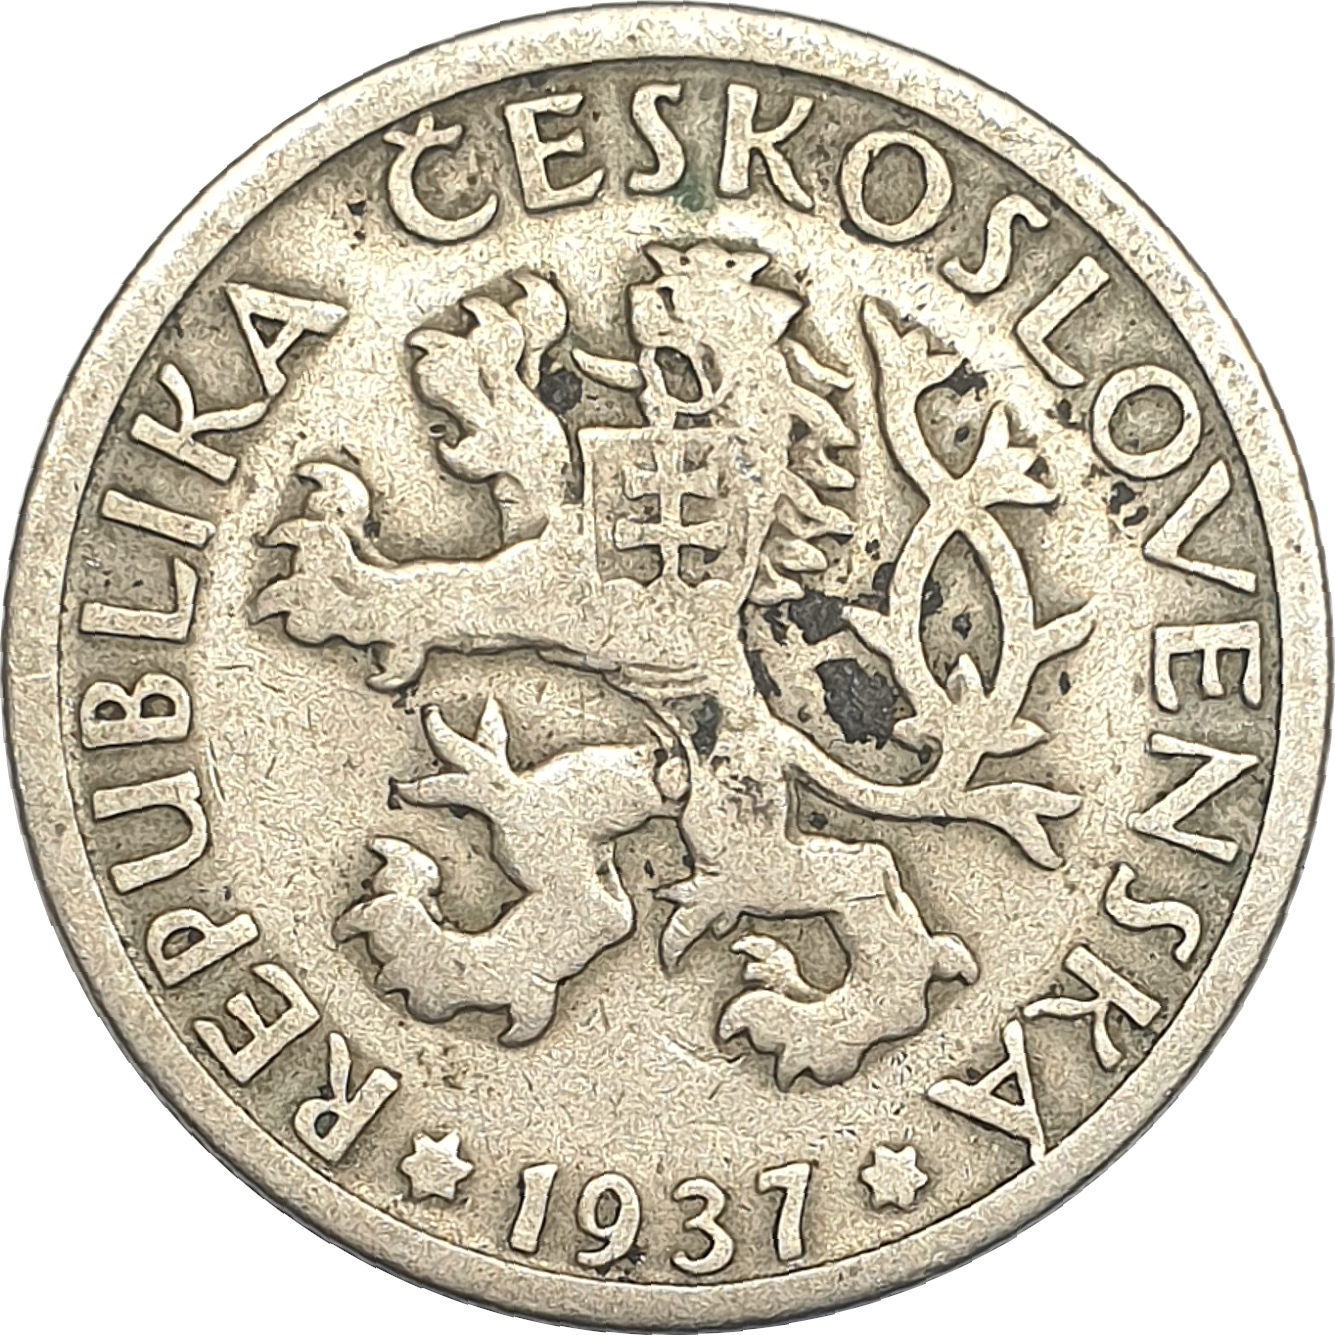 1 koruna - Heraldic Lion - Largest